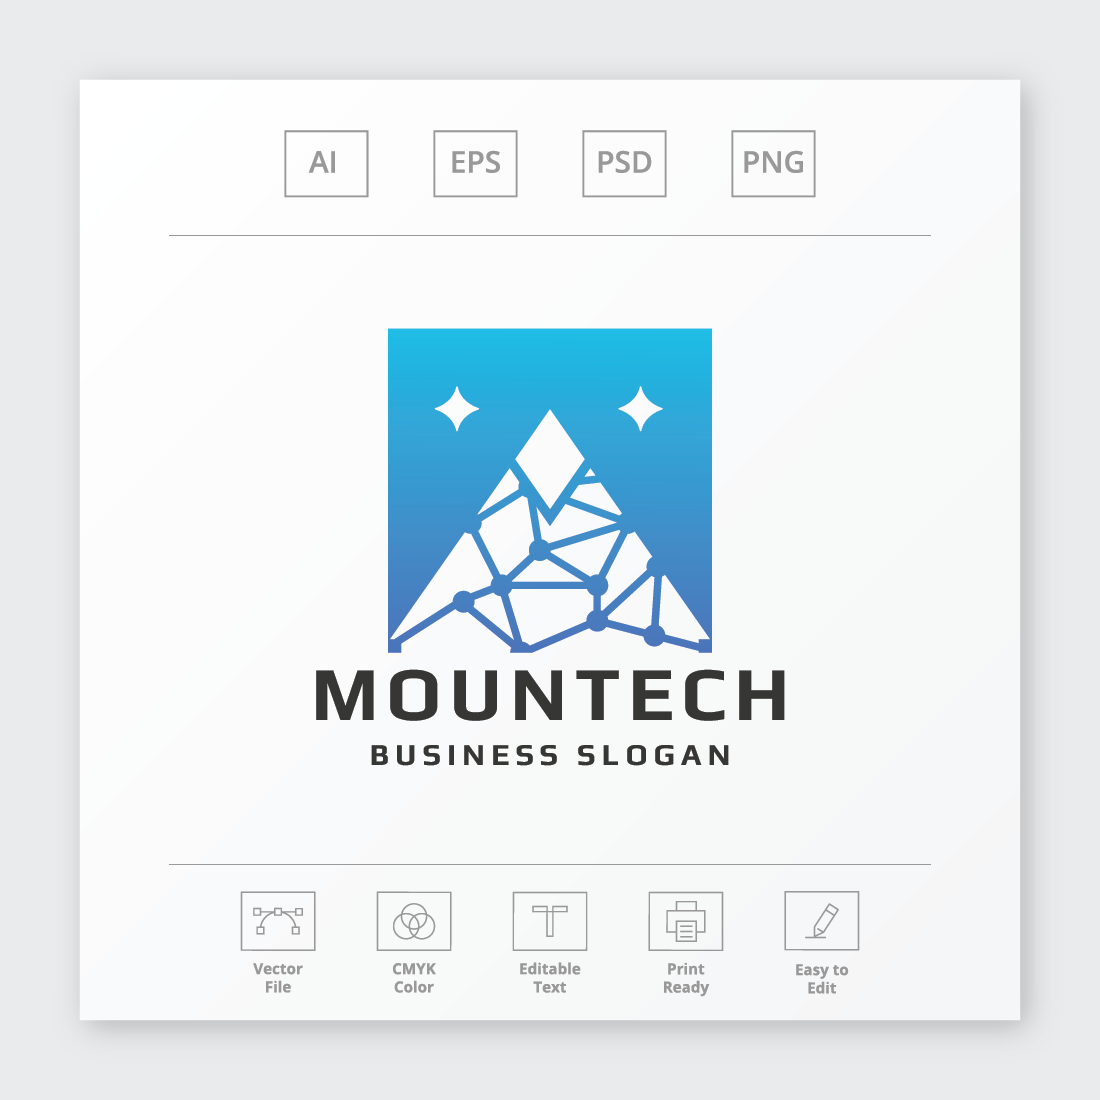 Mountain Tech Letter M Logo cover image.